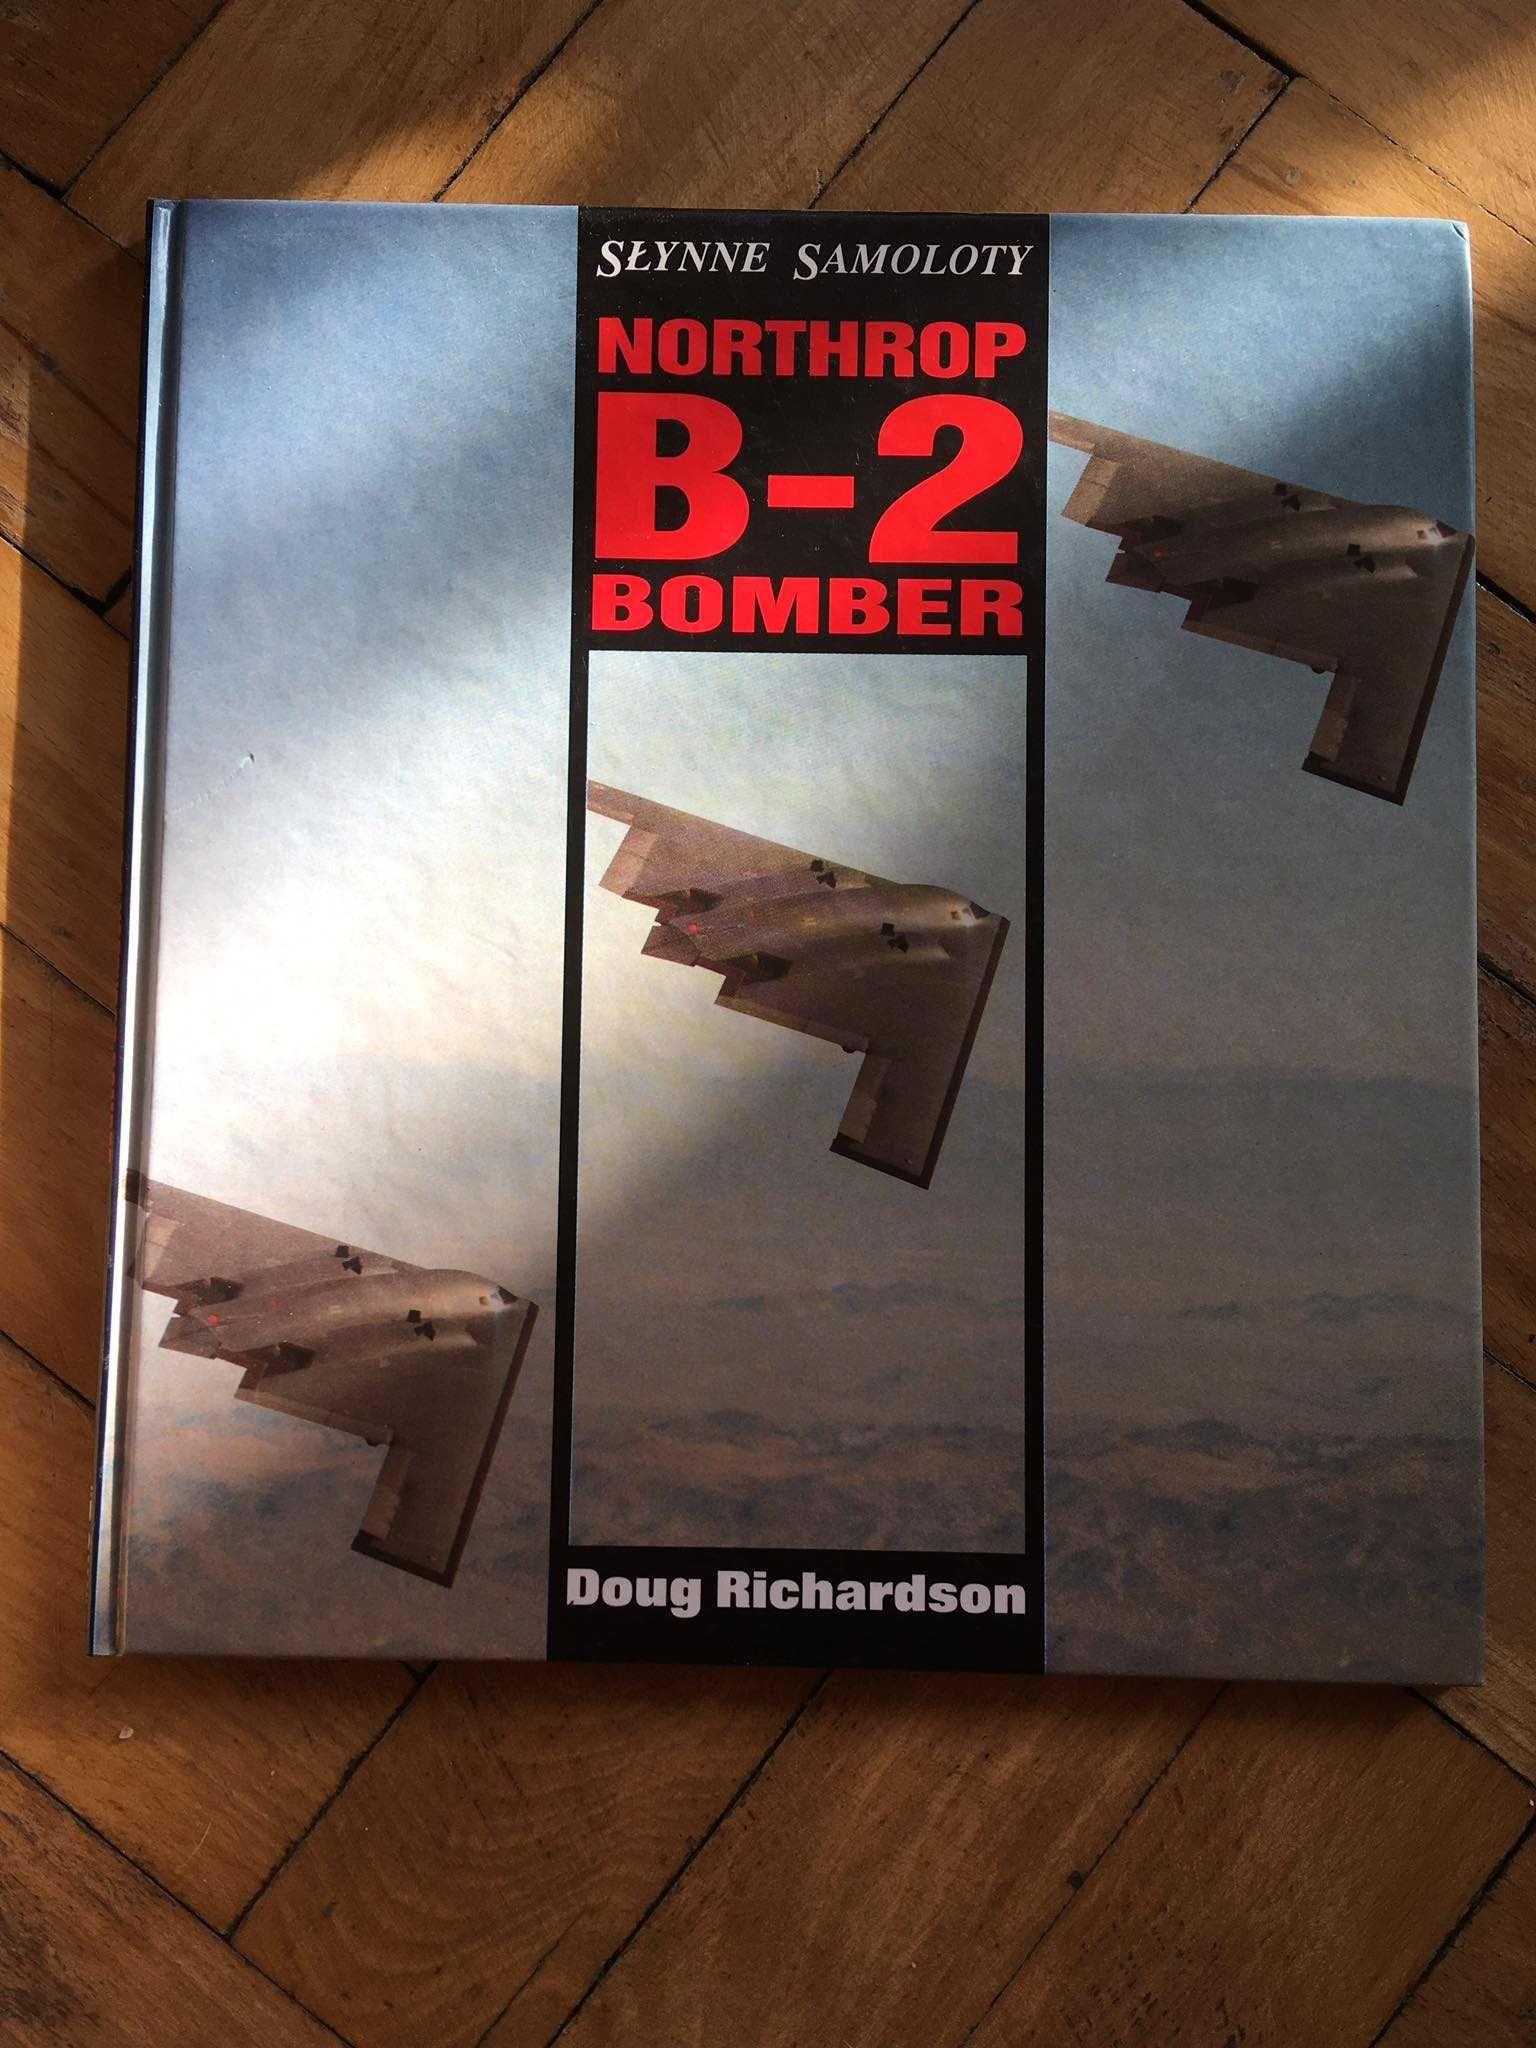 Doug Richardson b-2 bomber słynne samoloty